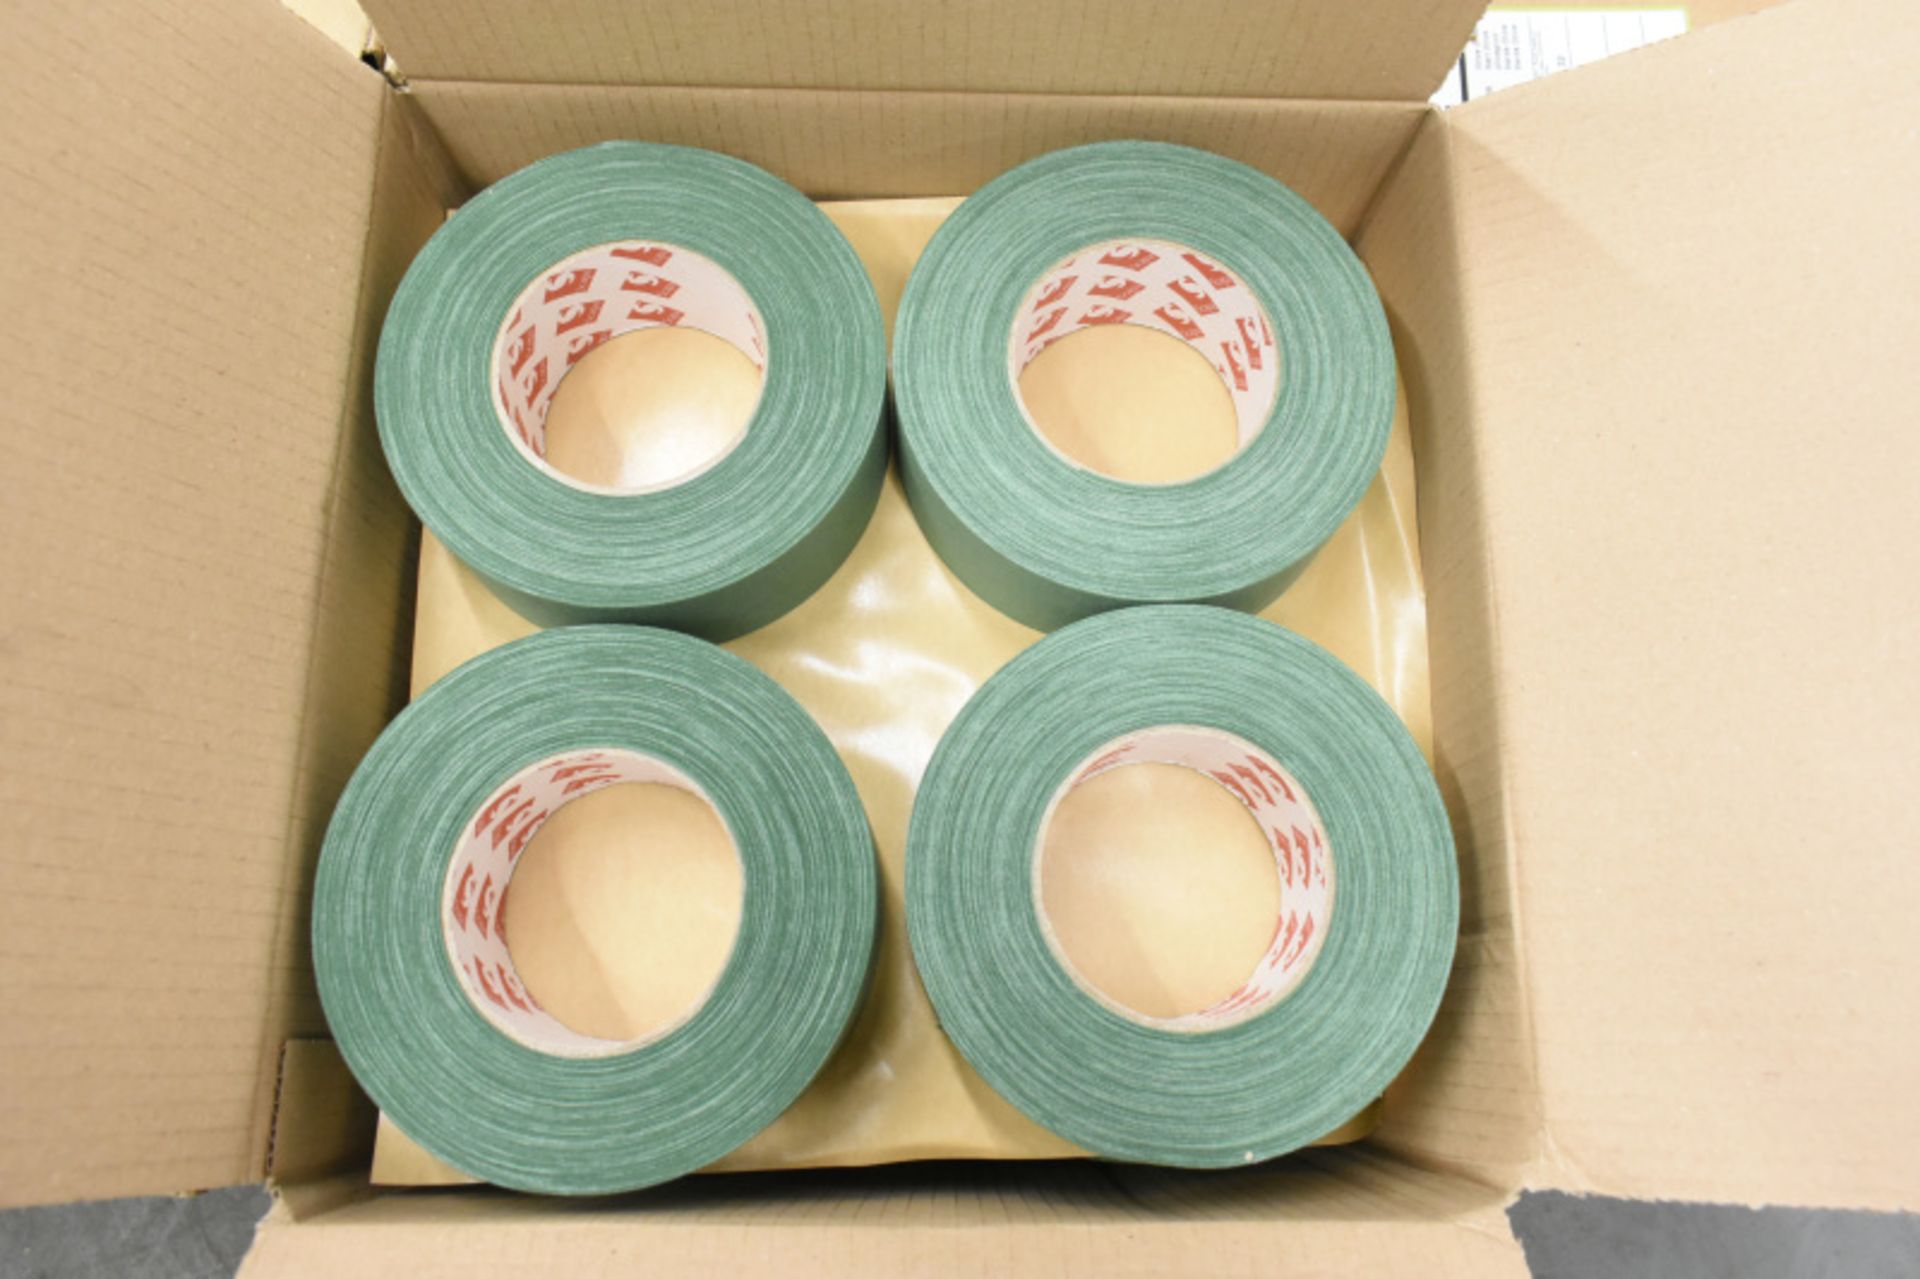 Scapa 3302 Pro Tape - Olive Green - 50mm x 50M rolls - 16 rolls per box - 1 box - manufactured 05/11 - Image 2 of 4